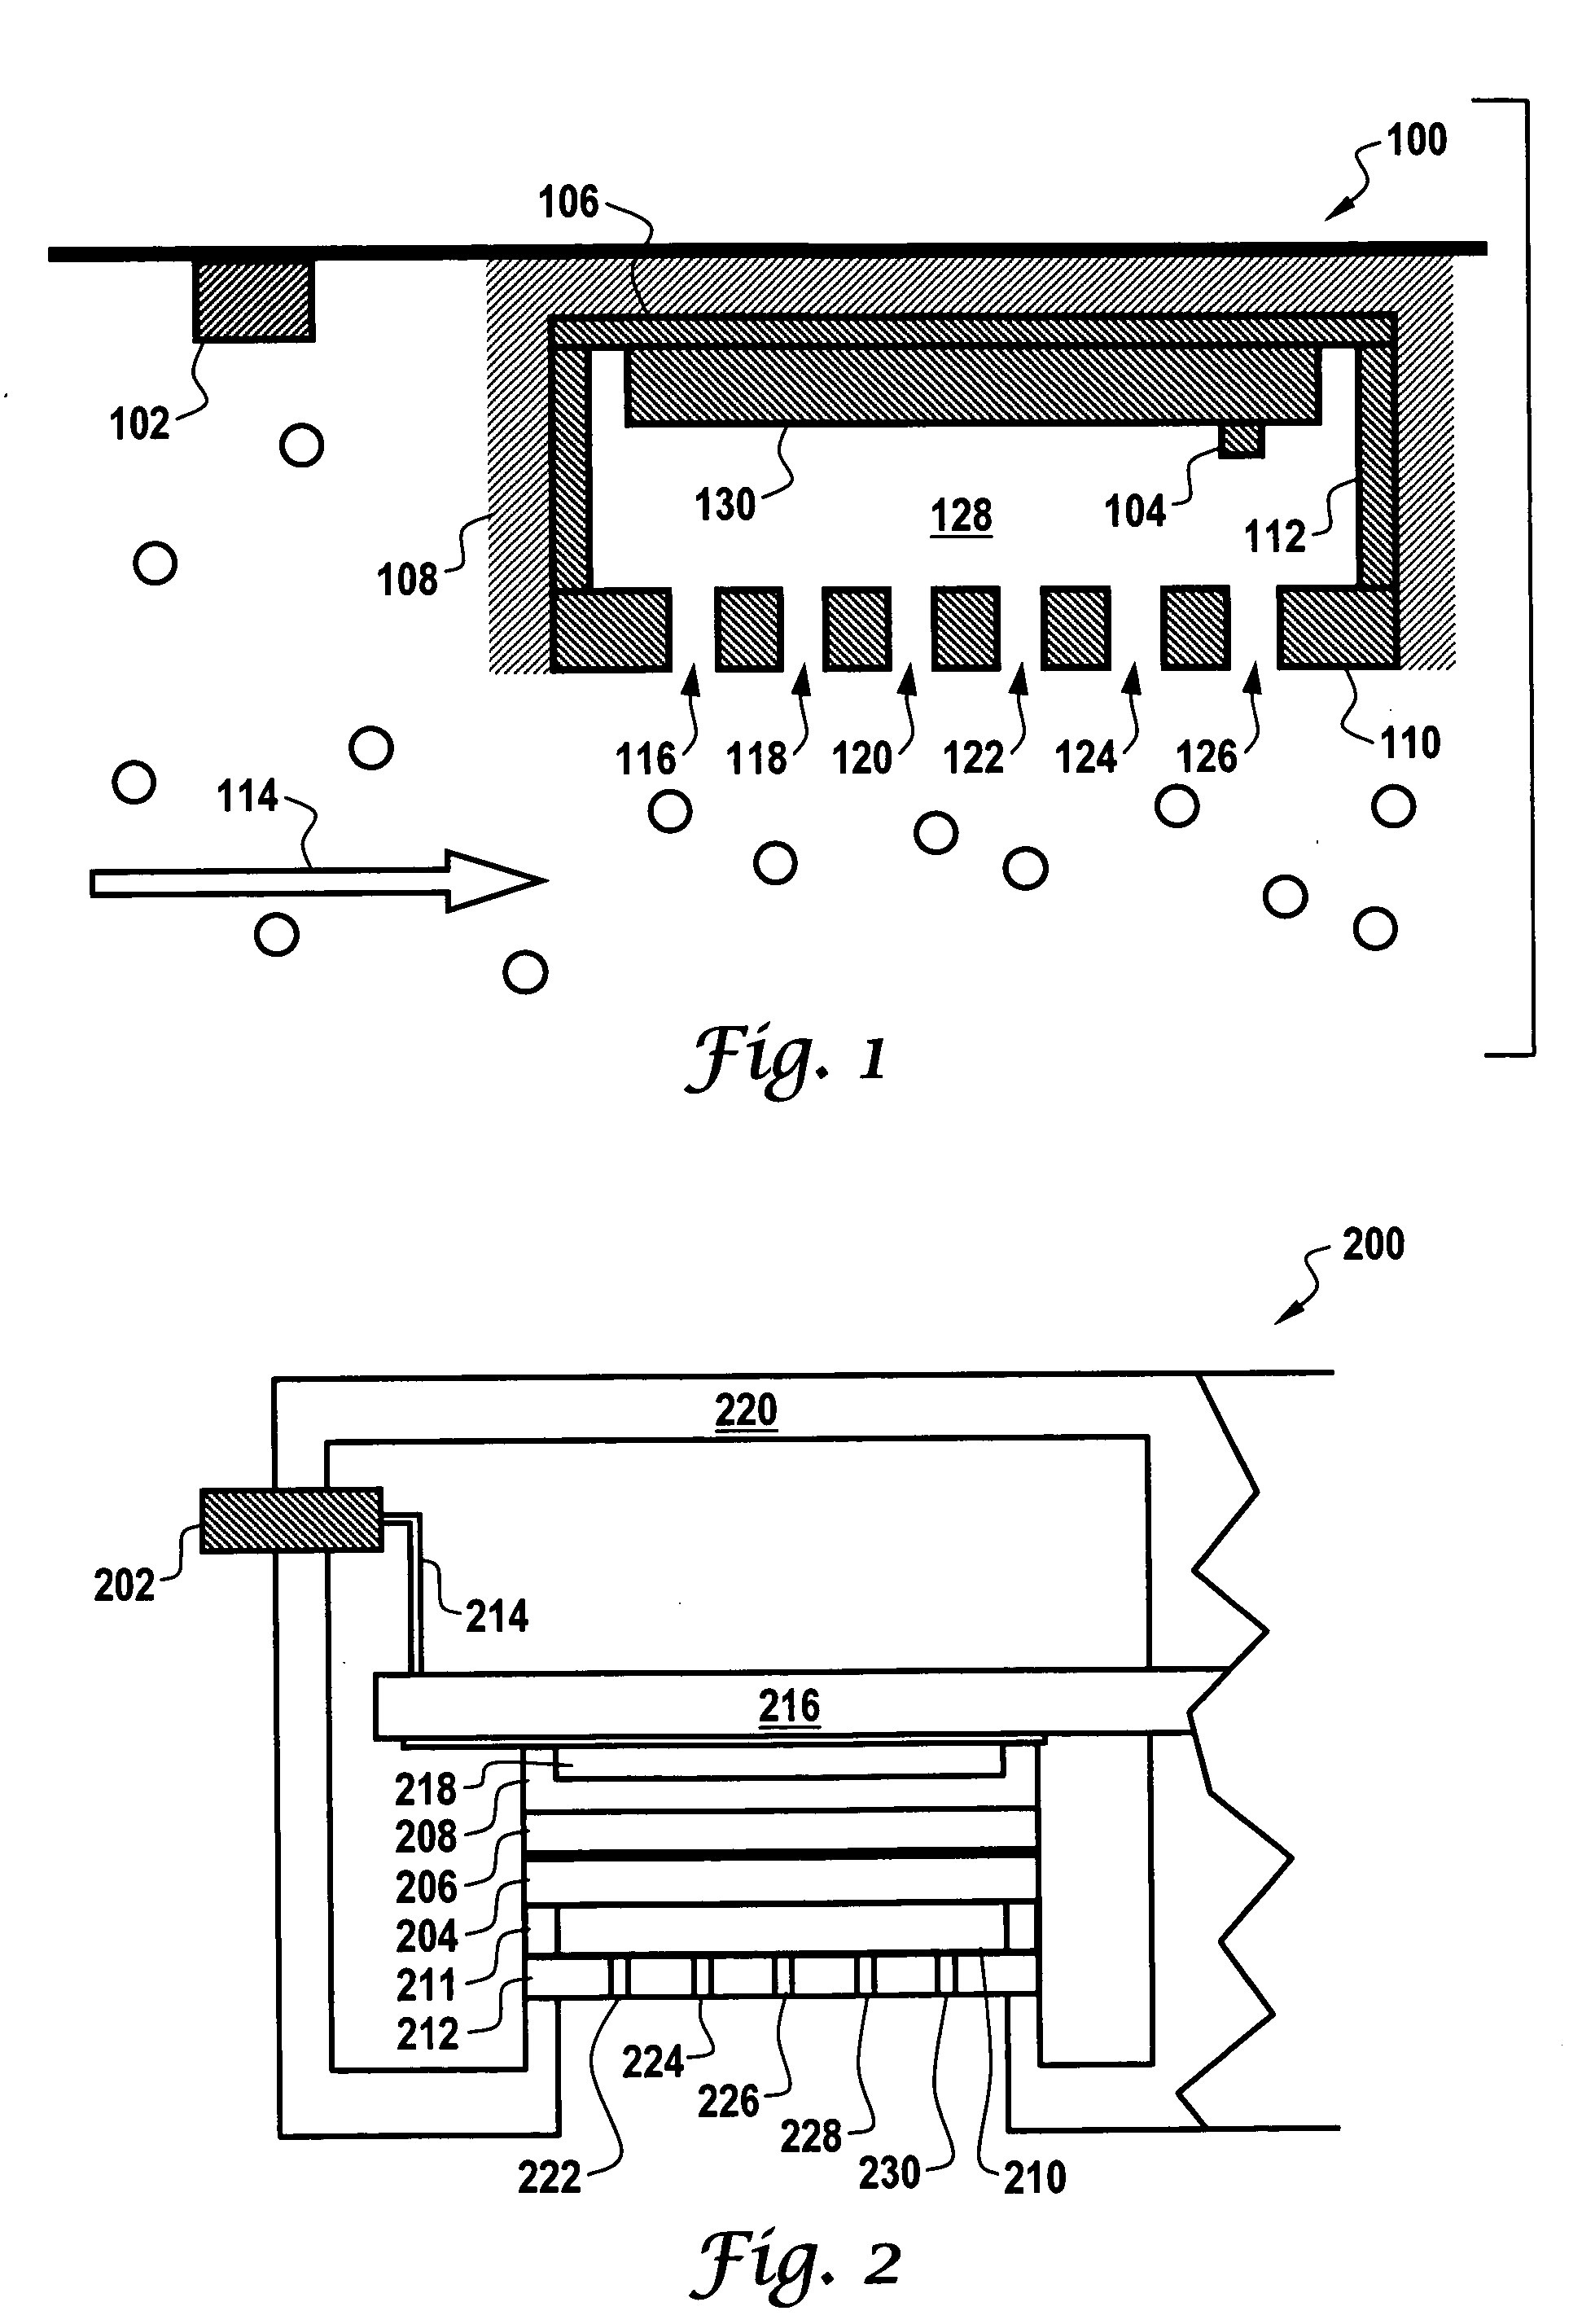 Relative humidity sensor enclosed with ceramic heater